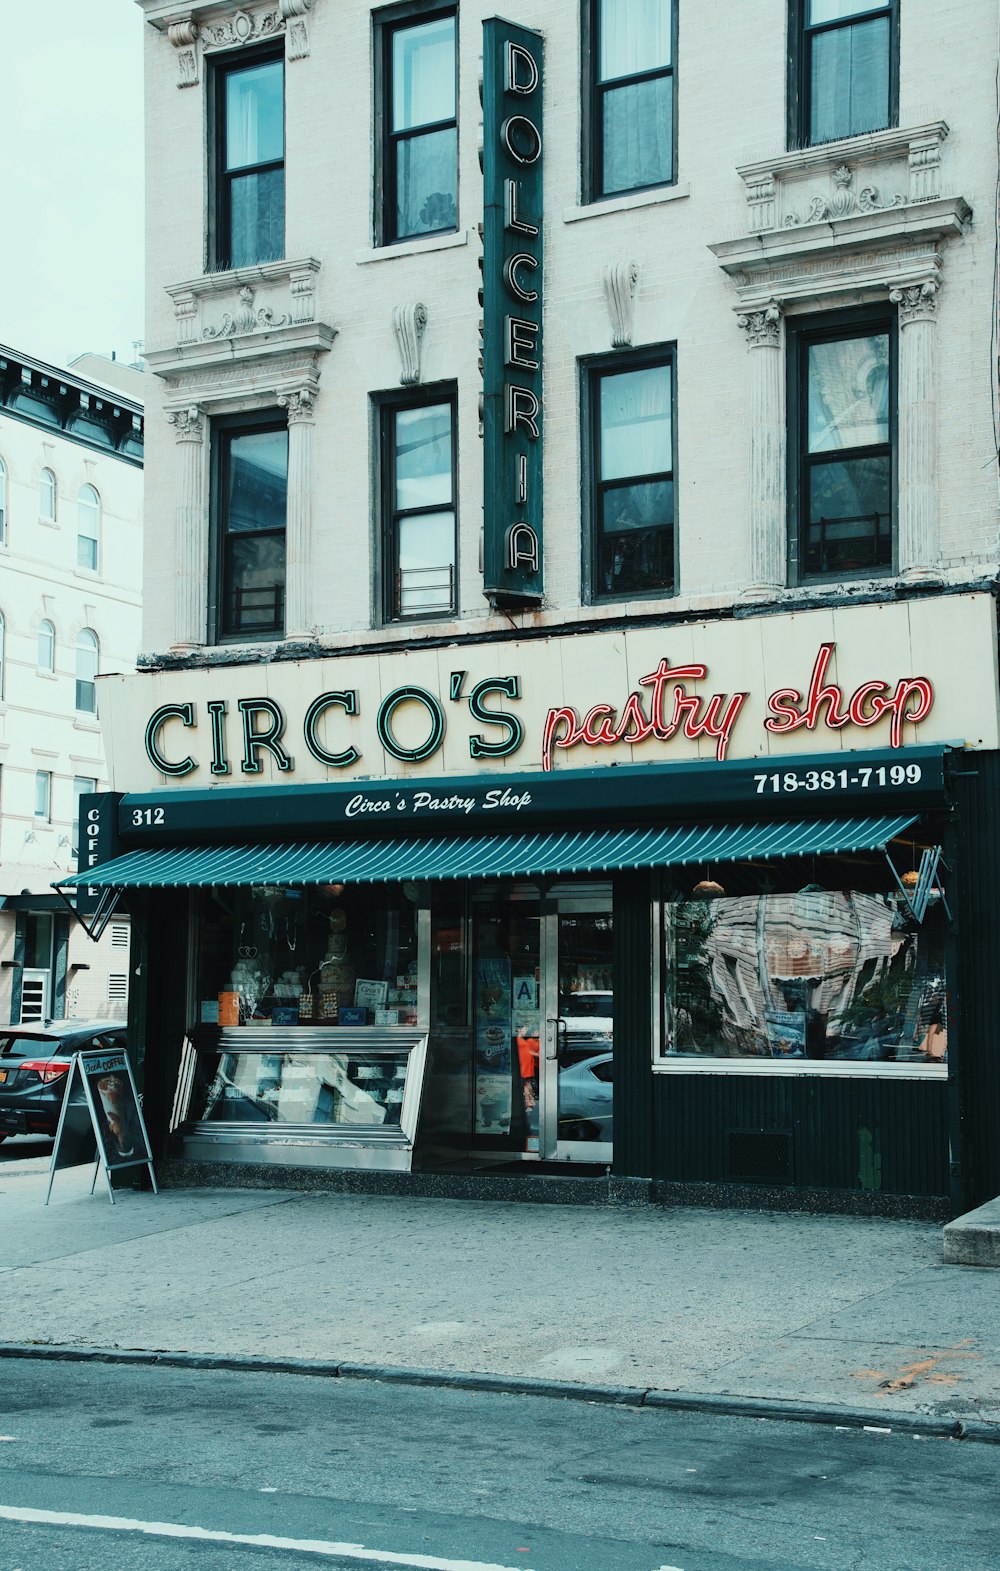 Fachada da loja Circo's Pastry Shop